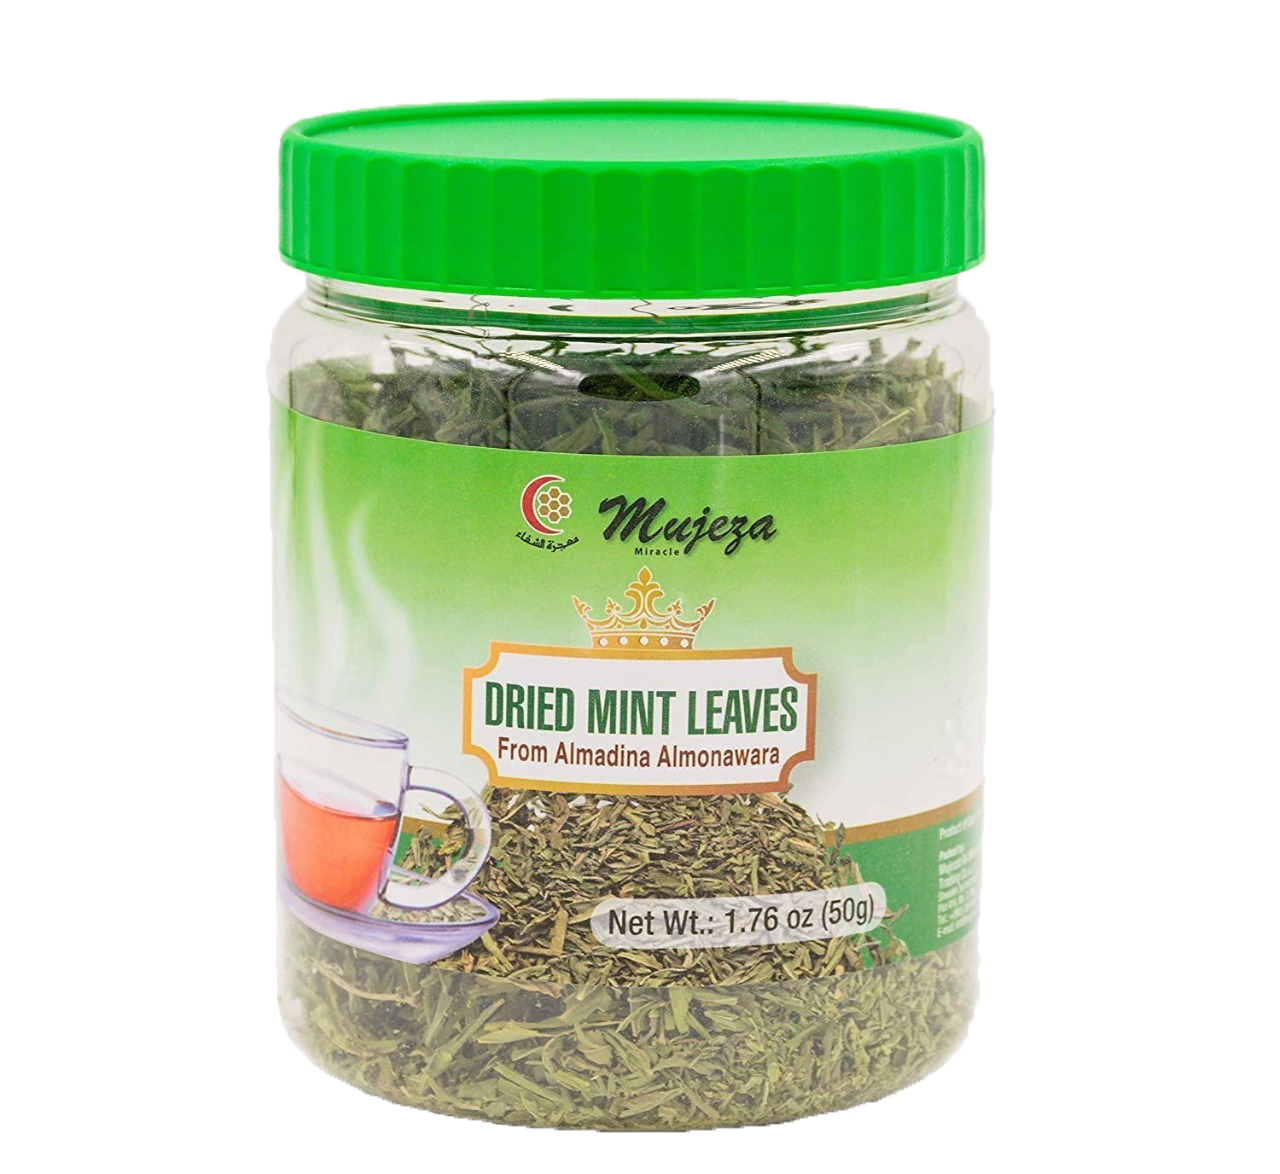 Dried Mint Leaves | Mujeza Al-Shifa |Miracle| Dried Mint / Menthe Séchée / Habak Medina |From Almadina Almonawara| (50 g) | 1.76oz.